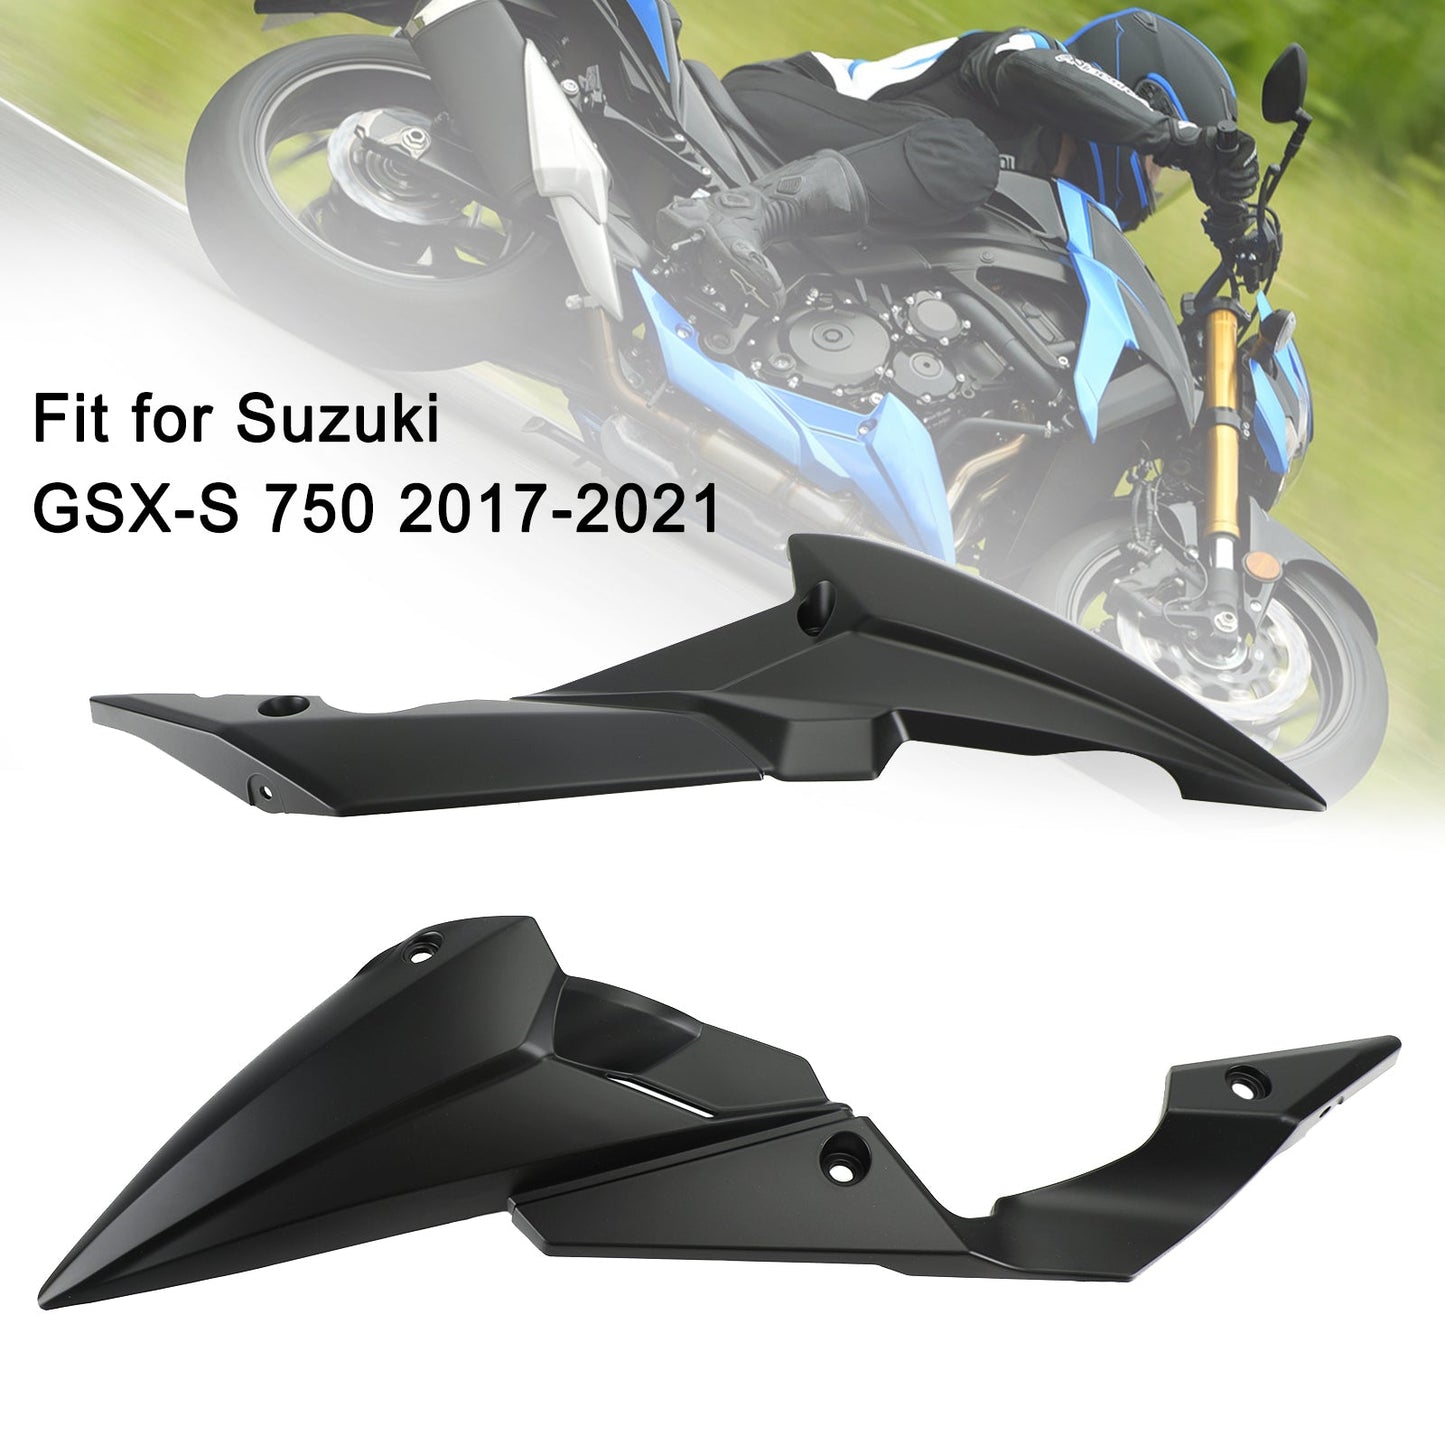 Lower Bottom Oil Belly Pan Guard Fairing For Suzuki GSXS GSX-S750 2017-2021 Black